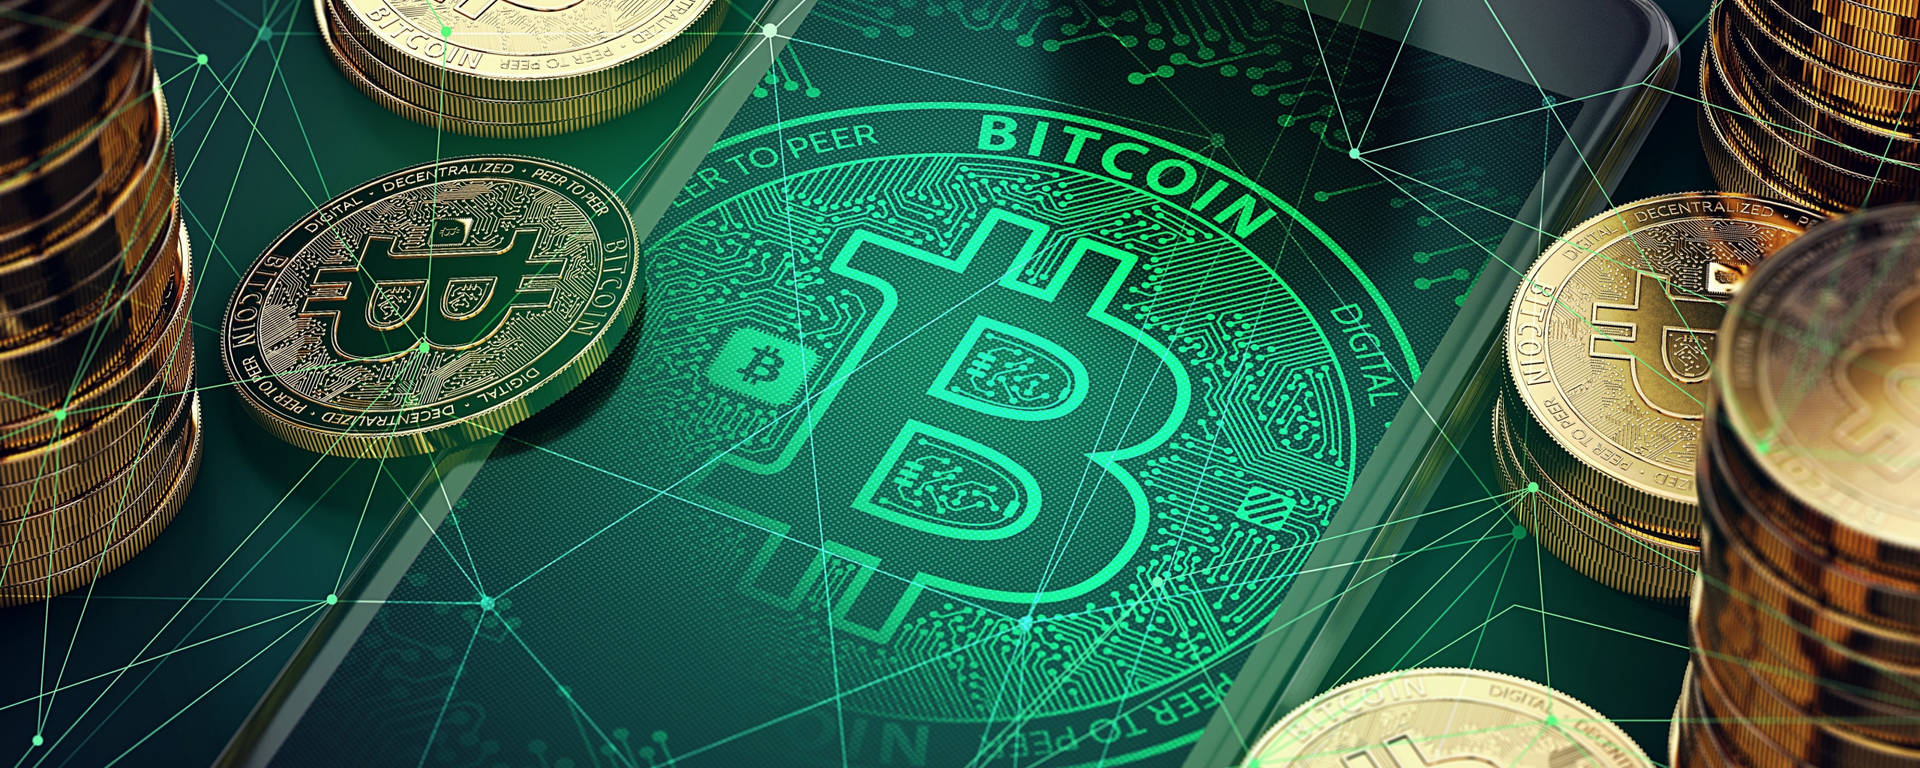 Bitcoin Symbol On Phone Crypto Background Wallpaper